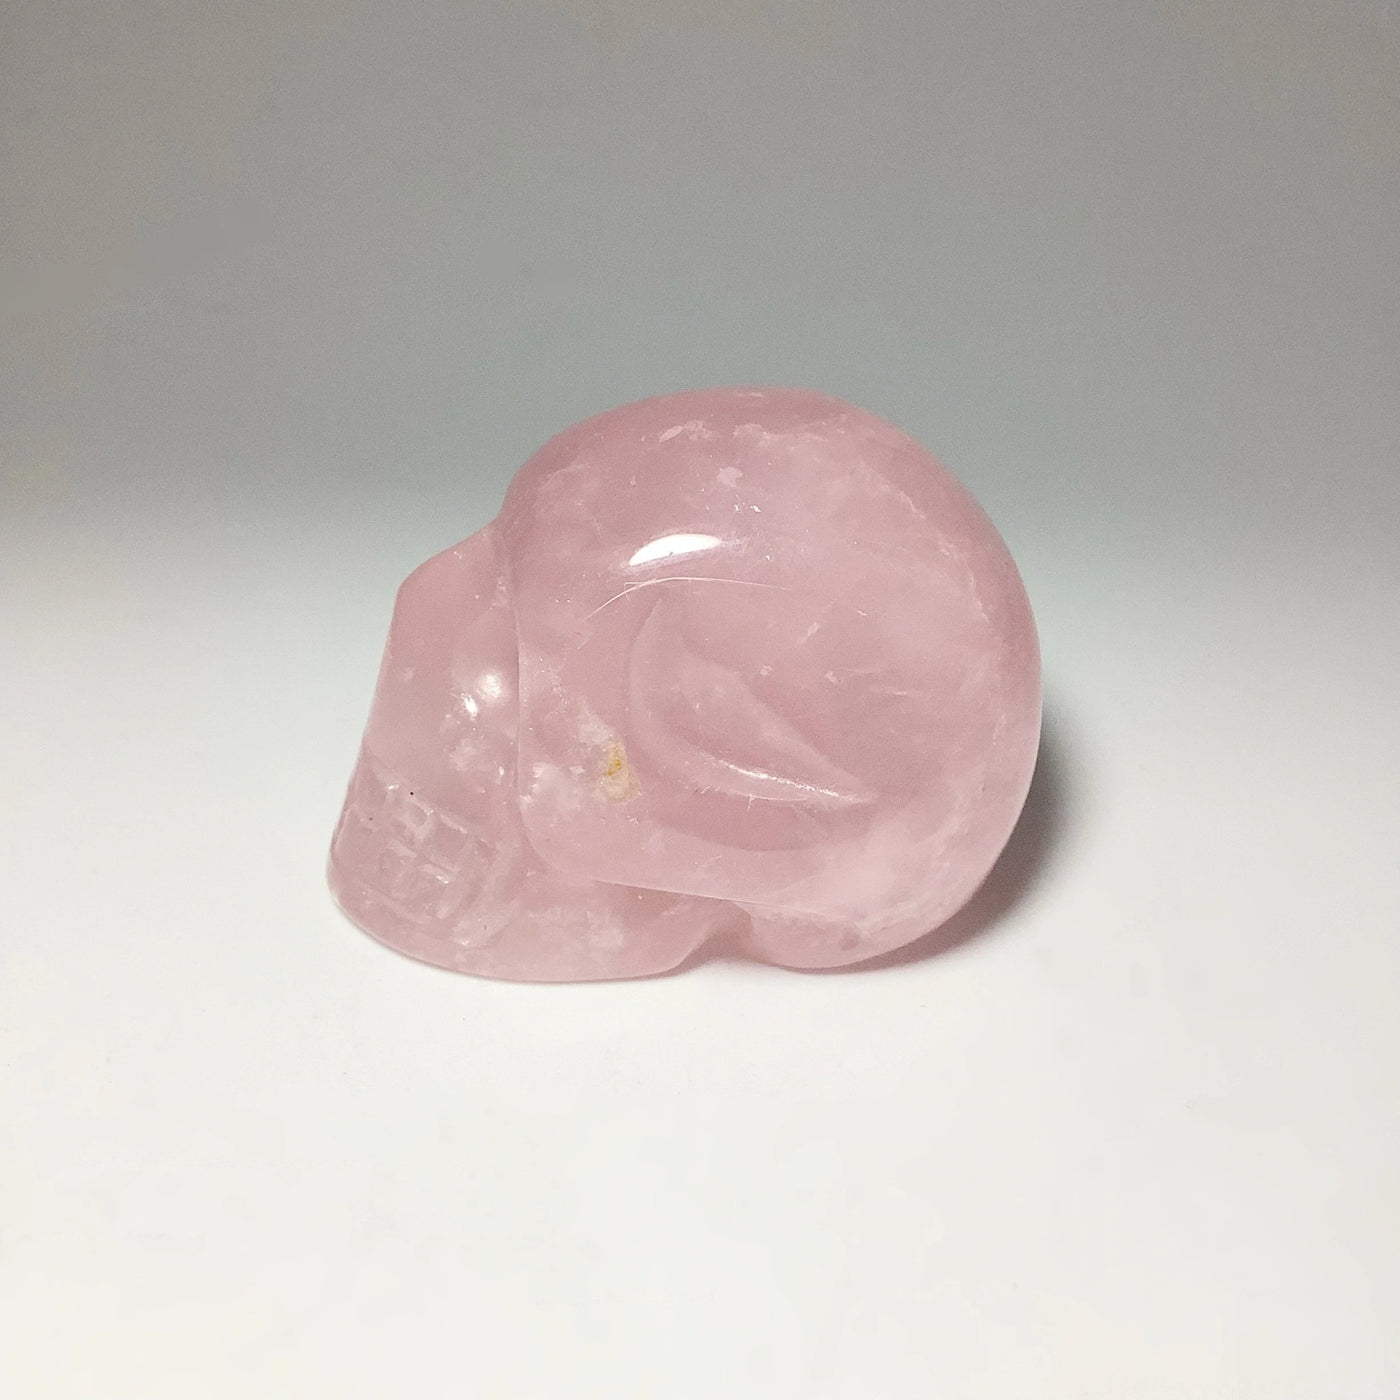 Carved Rose Quartz Crystal Skull